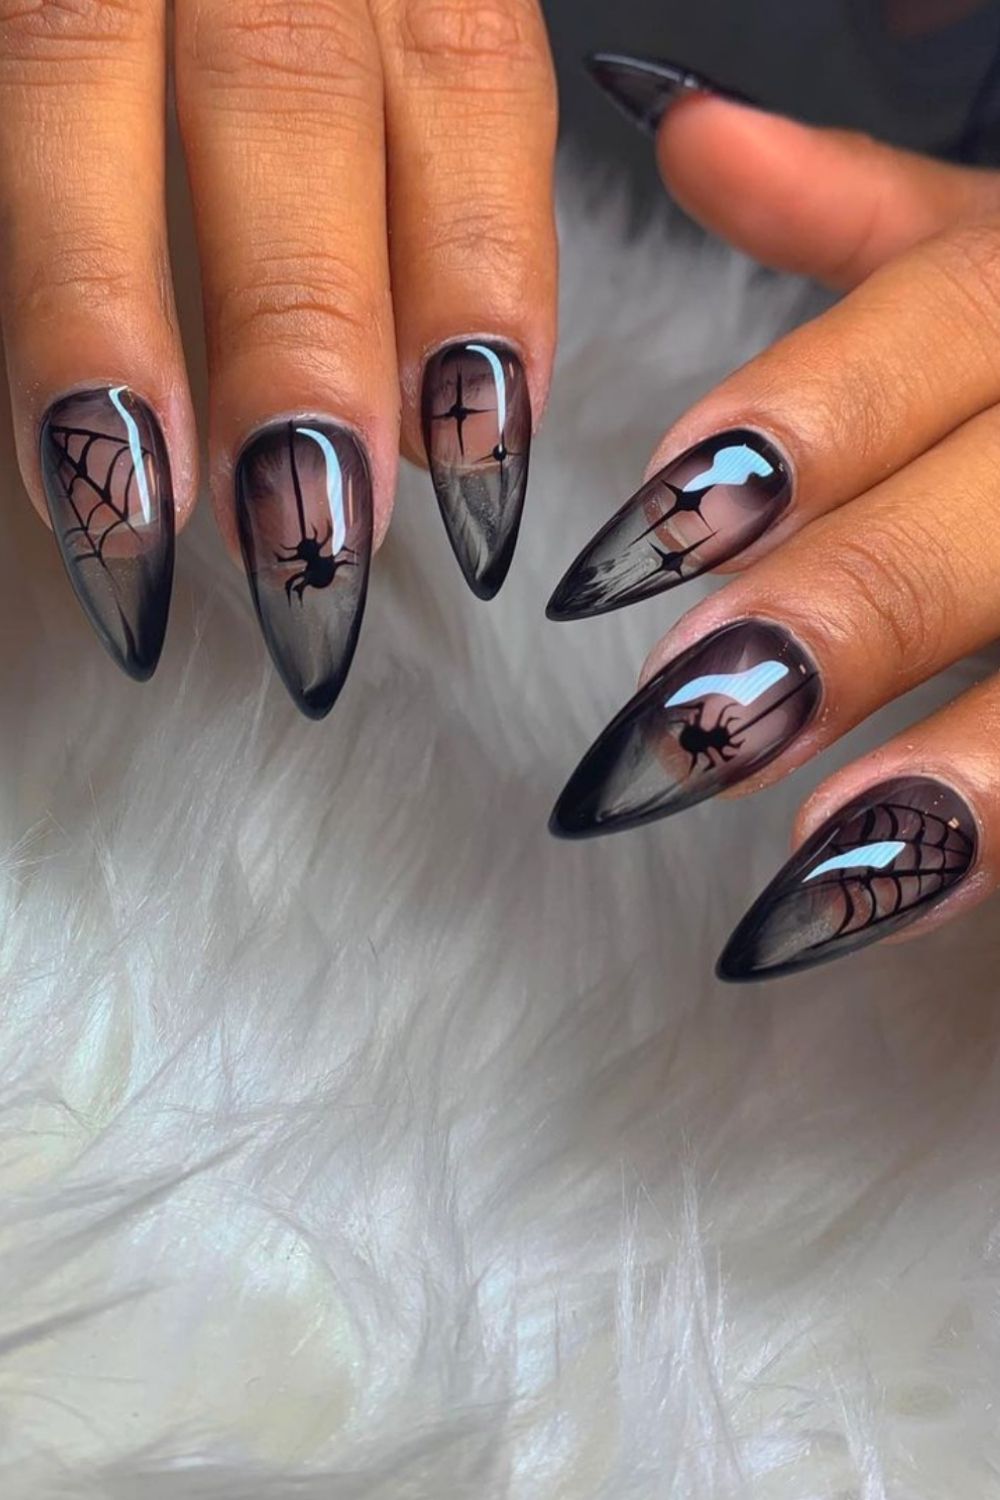 Cute Spooky Halloween Nails 2021